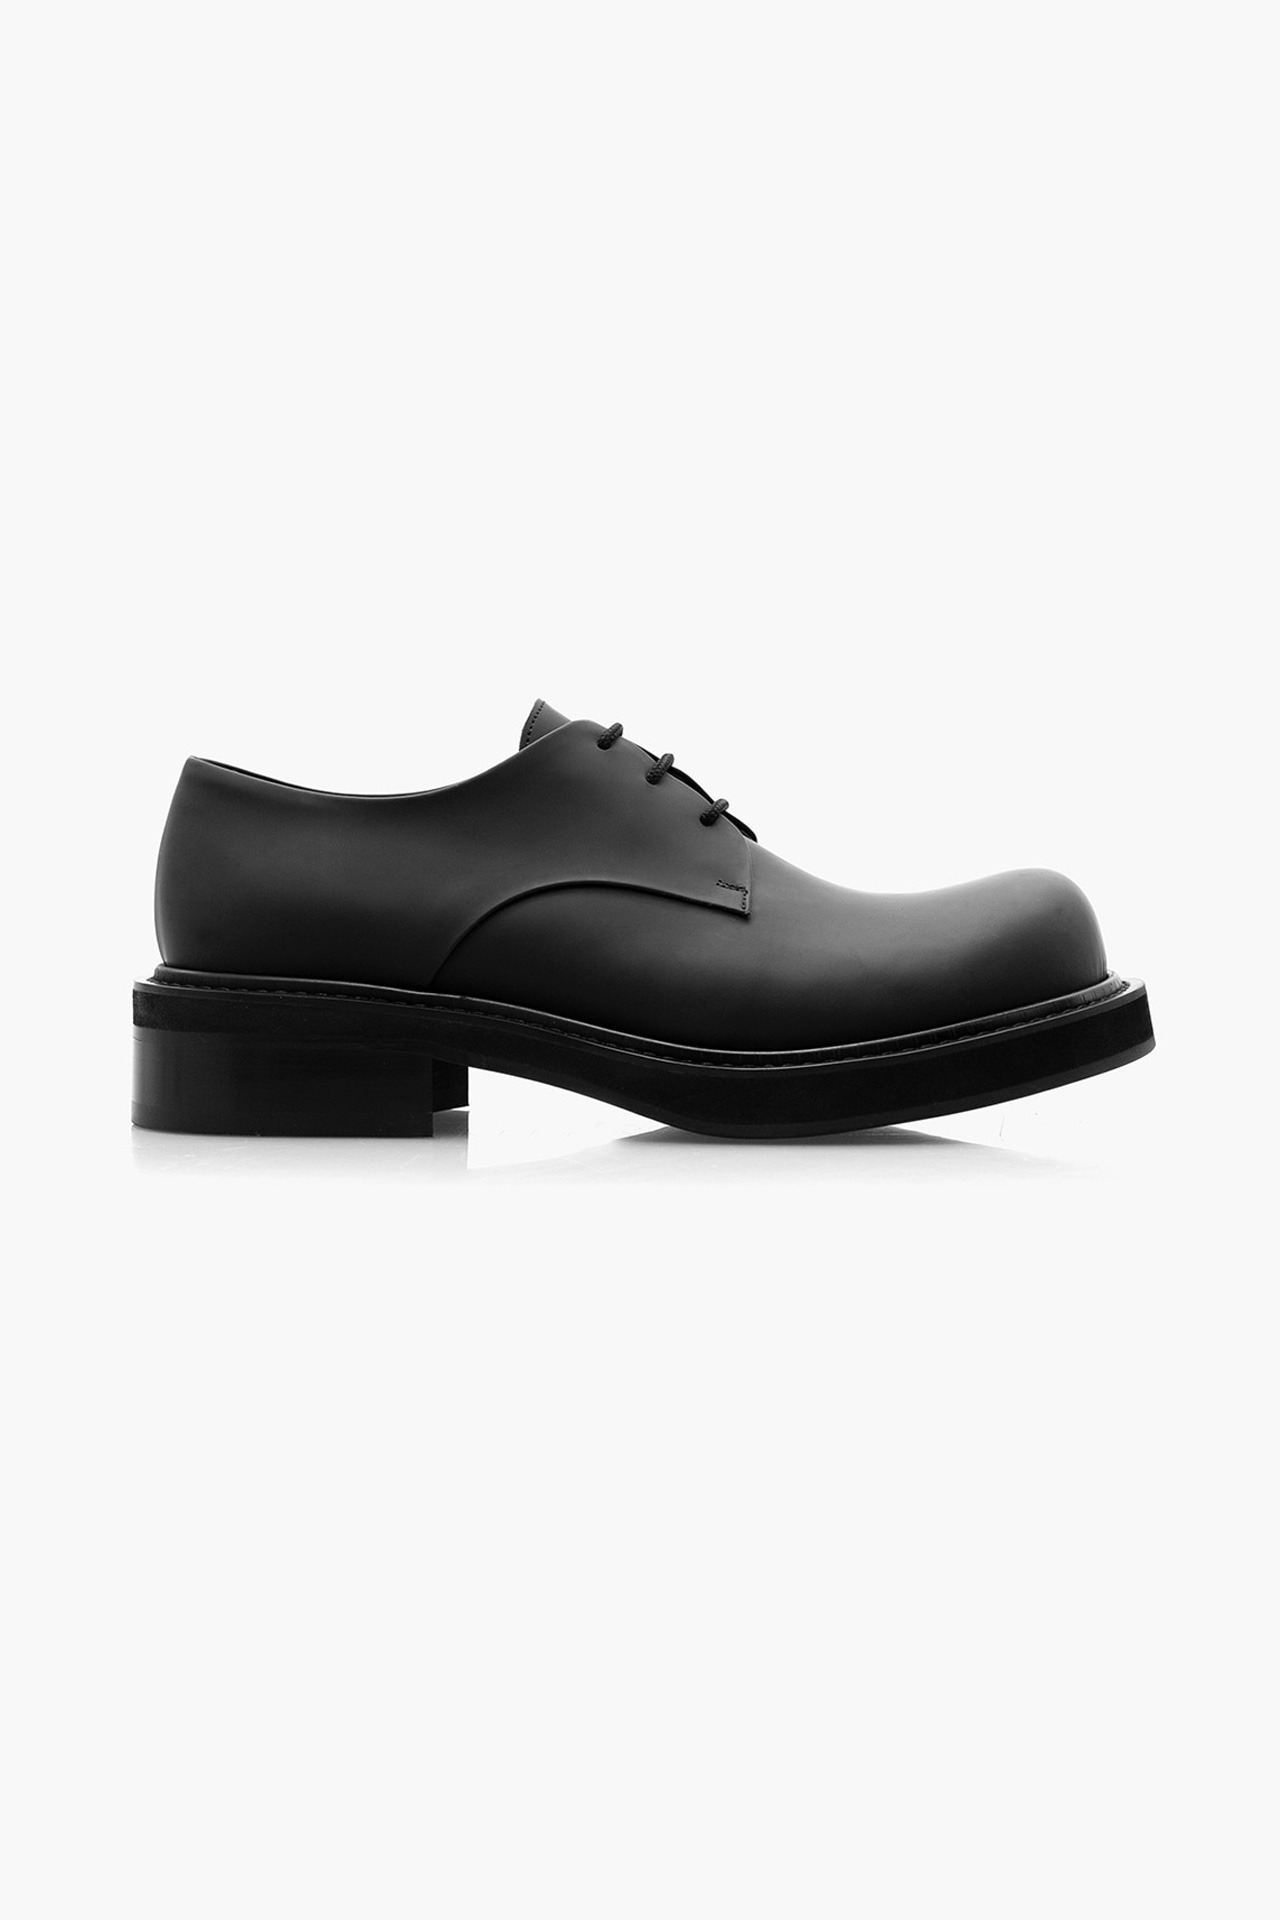 589 Dirk Derby Shoes Black